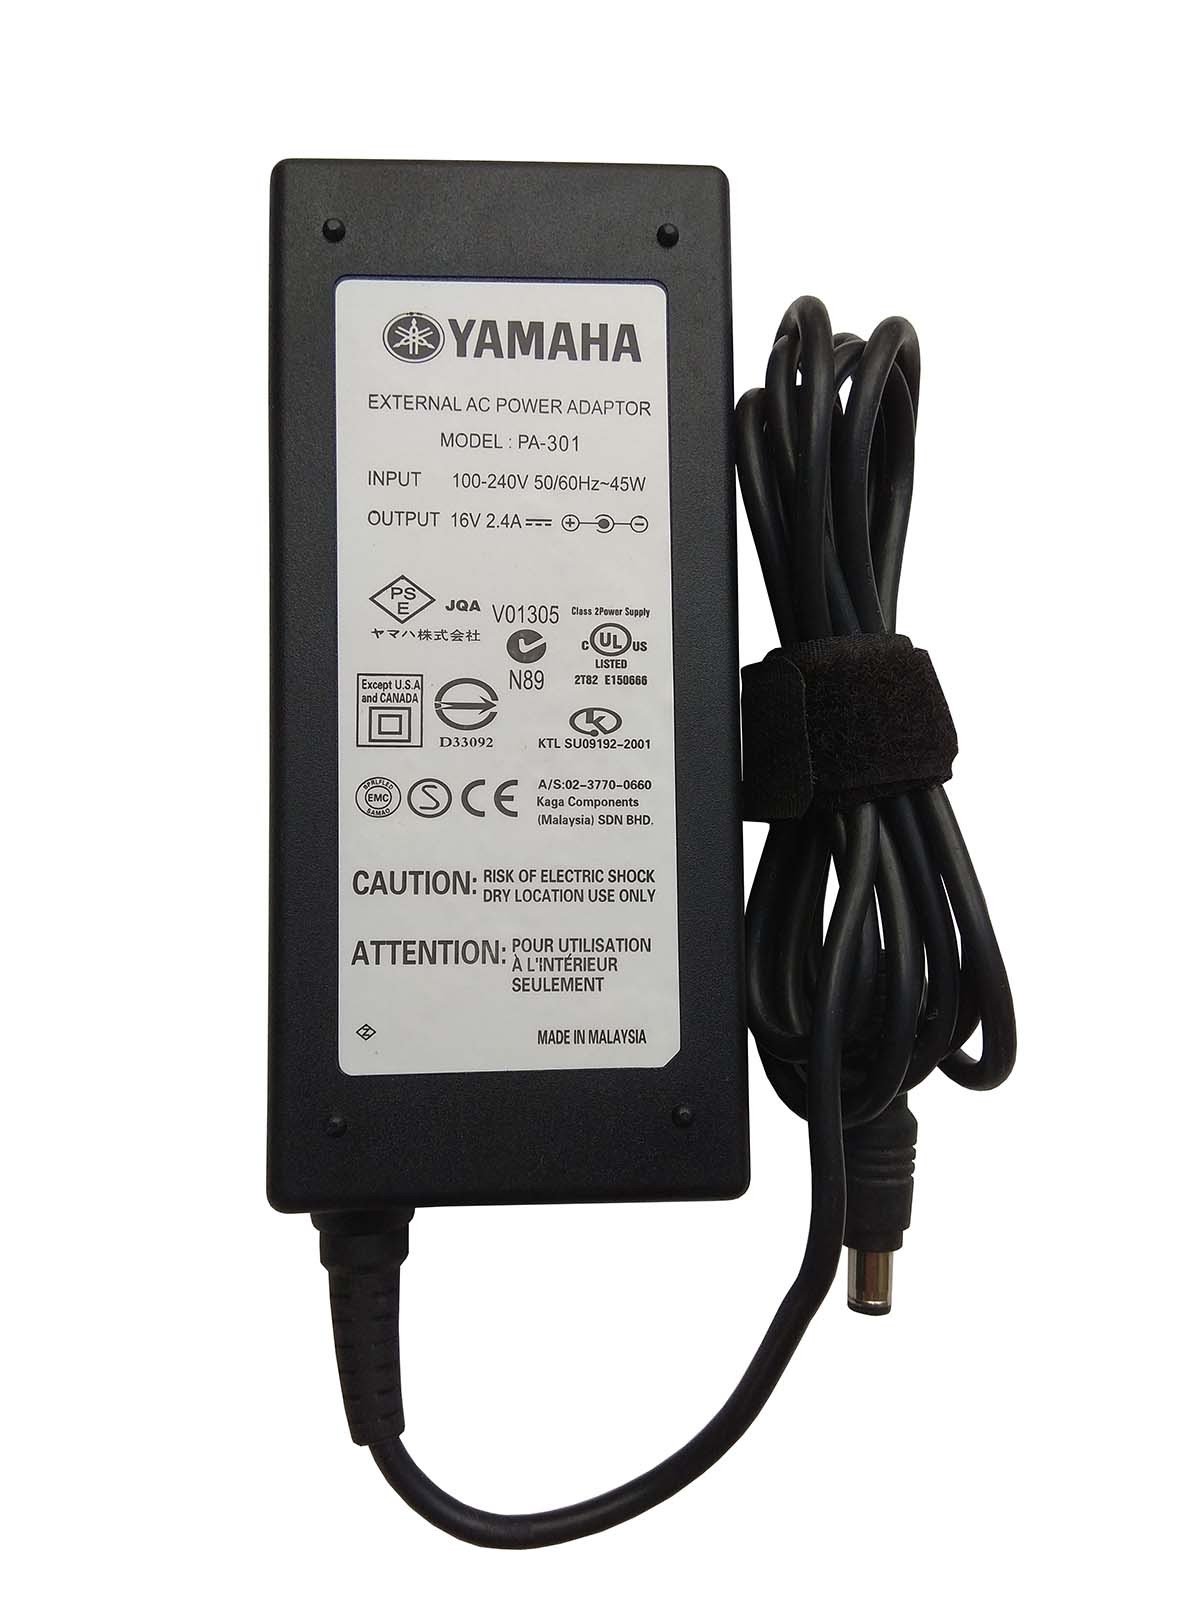 Yamaha PSR-A3000 AC Adapter Charger Power Supply 16V 2.4A 38W PA-300C PA-300 - $39.99